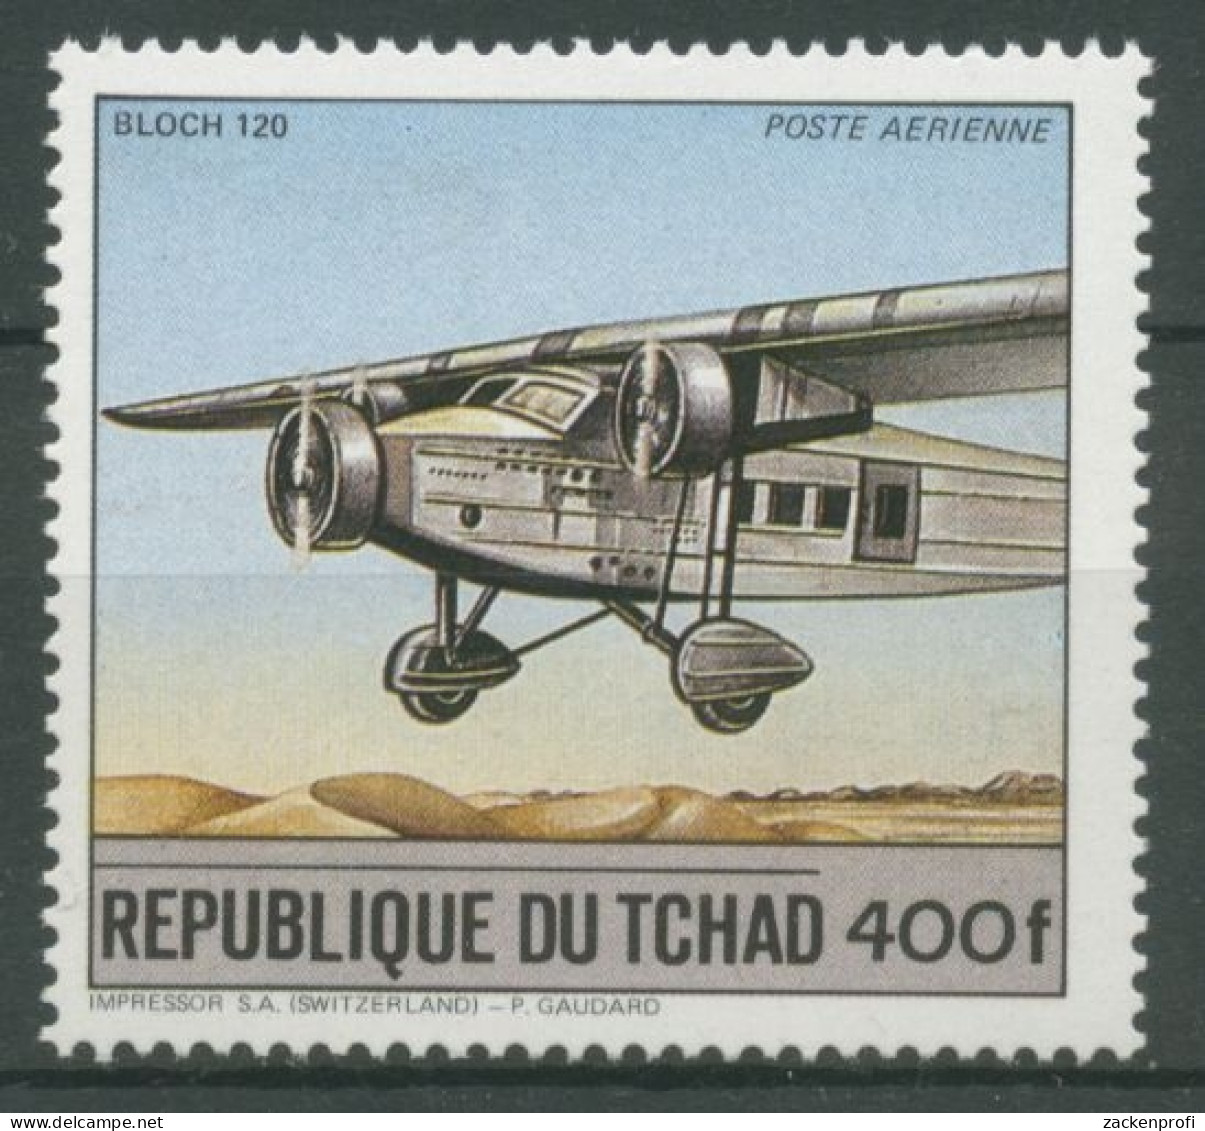 Tschad 1984 Verkehrsmittel Bloch 120 Flugzeug 1065 A Postfrisch - Chad (1960-...)